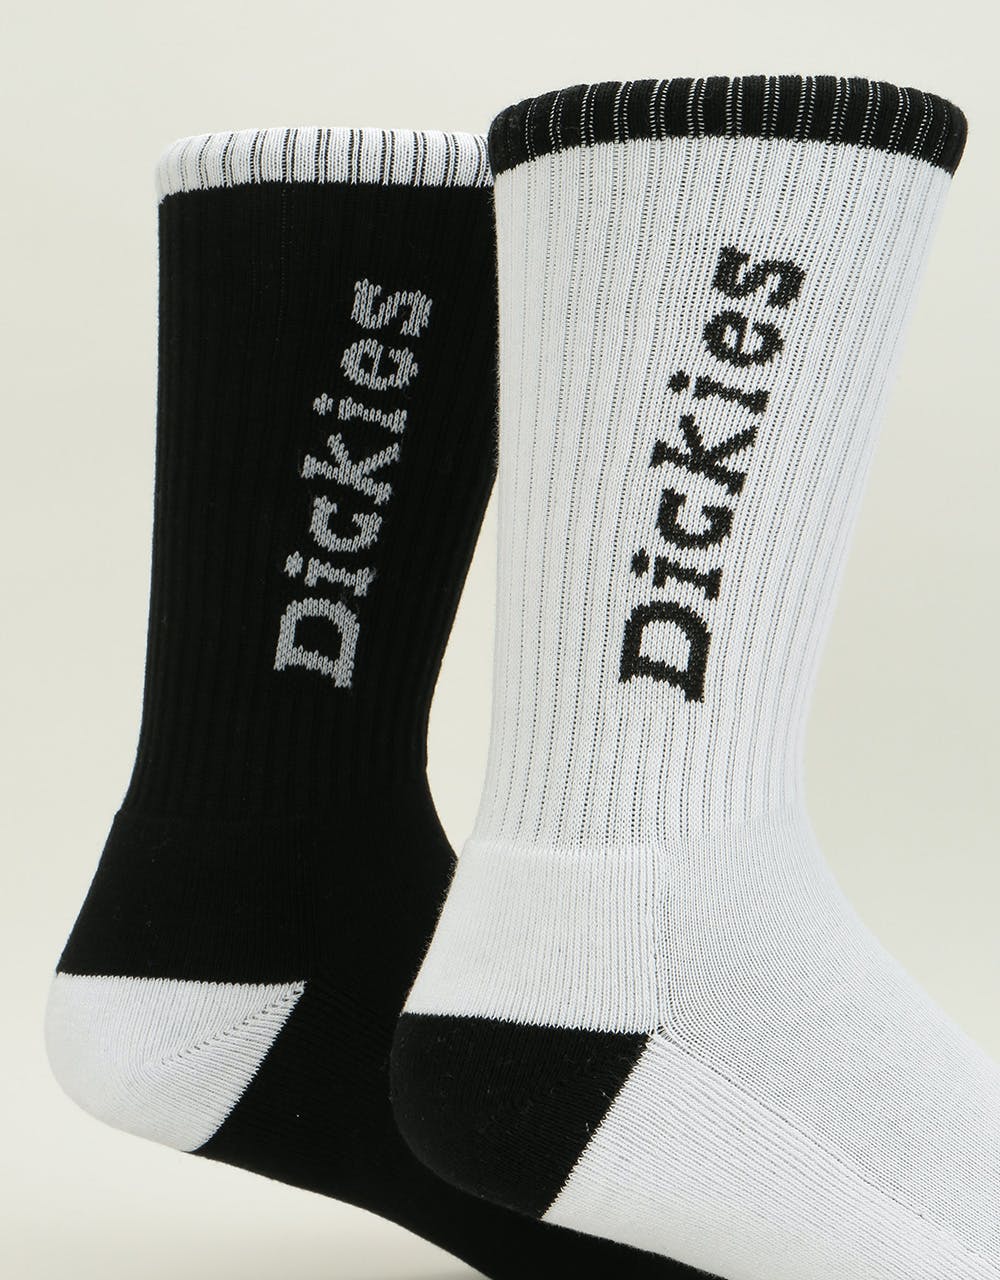 Dickies Calvert City 2-Pack Socks - Assorted